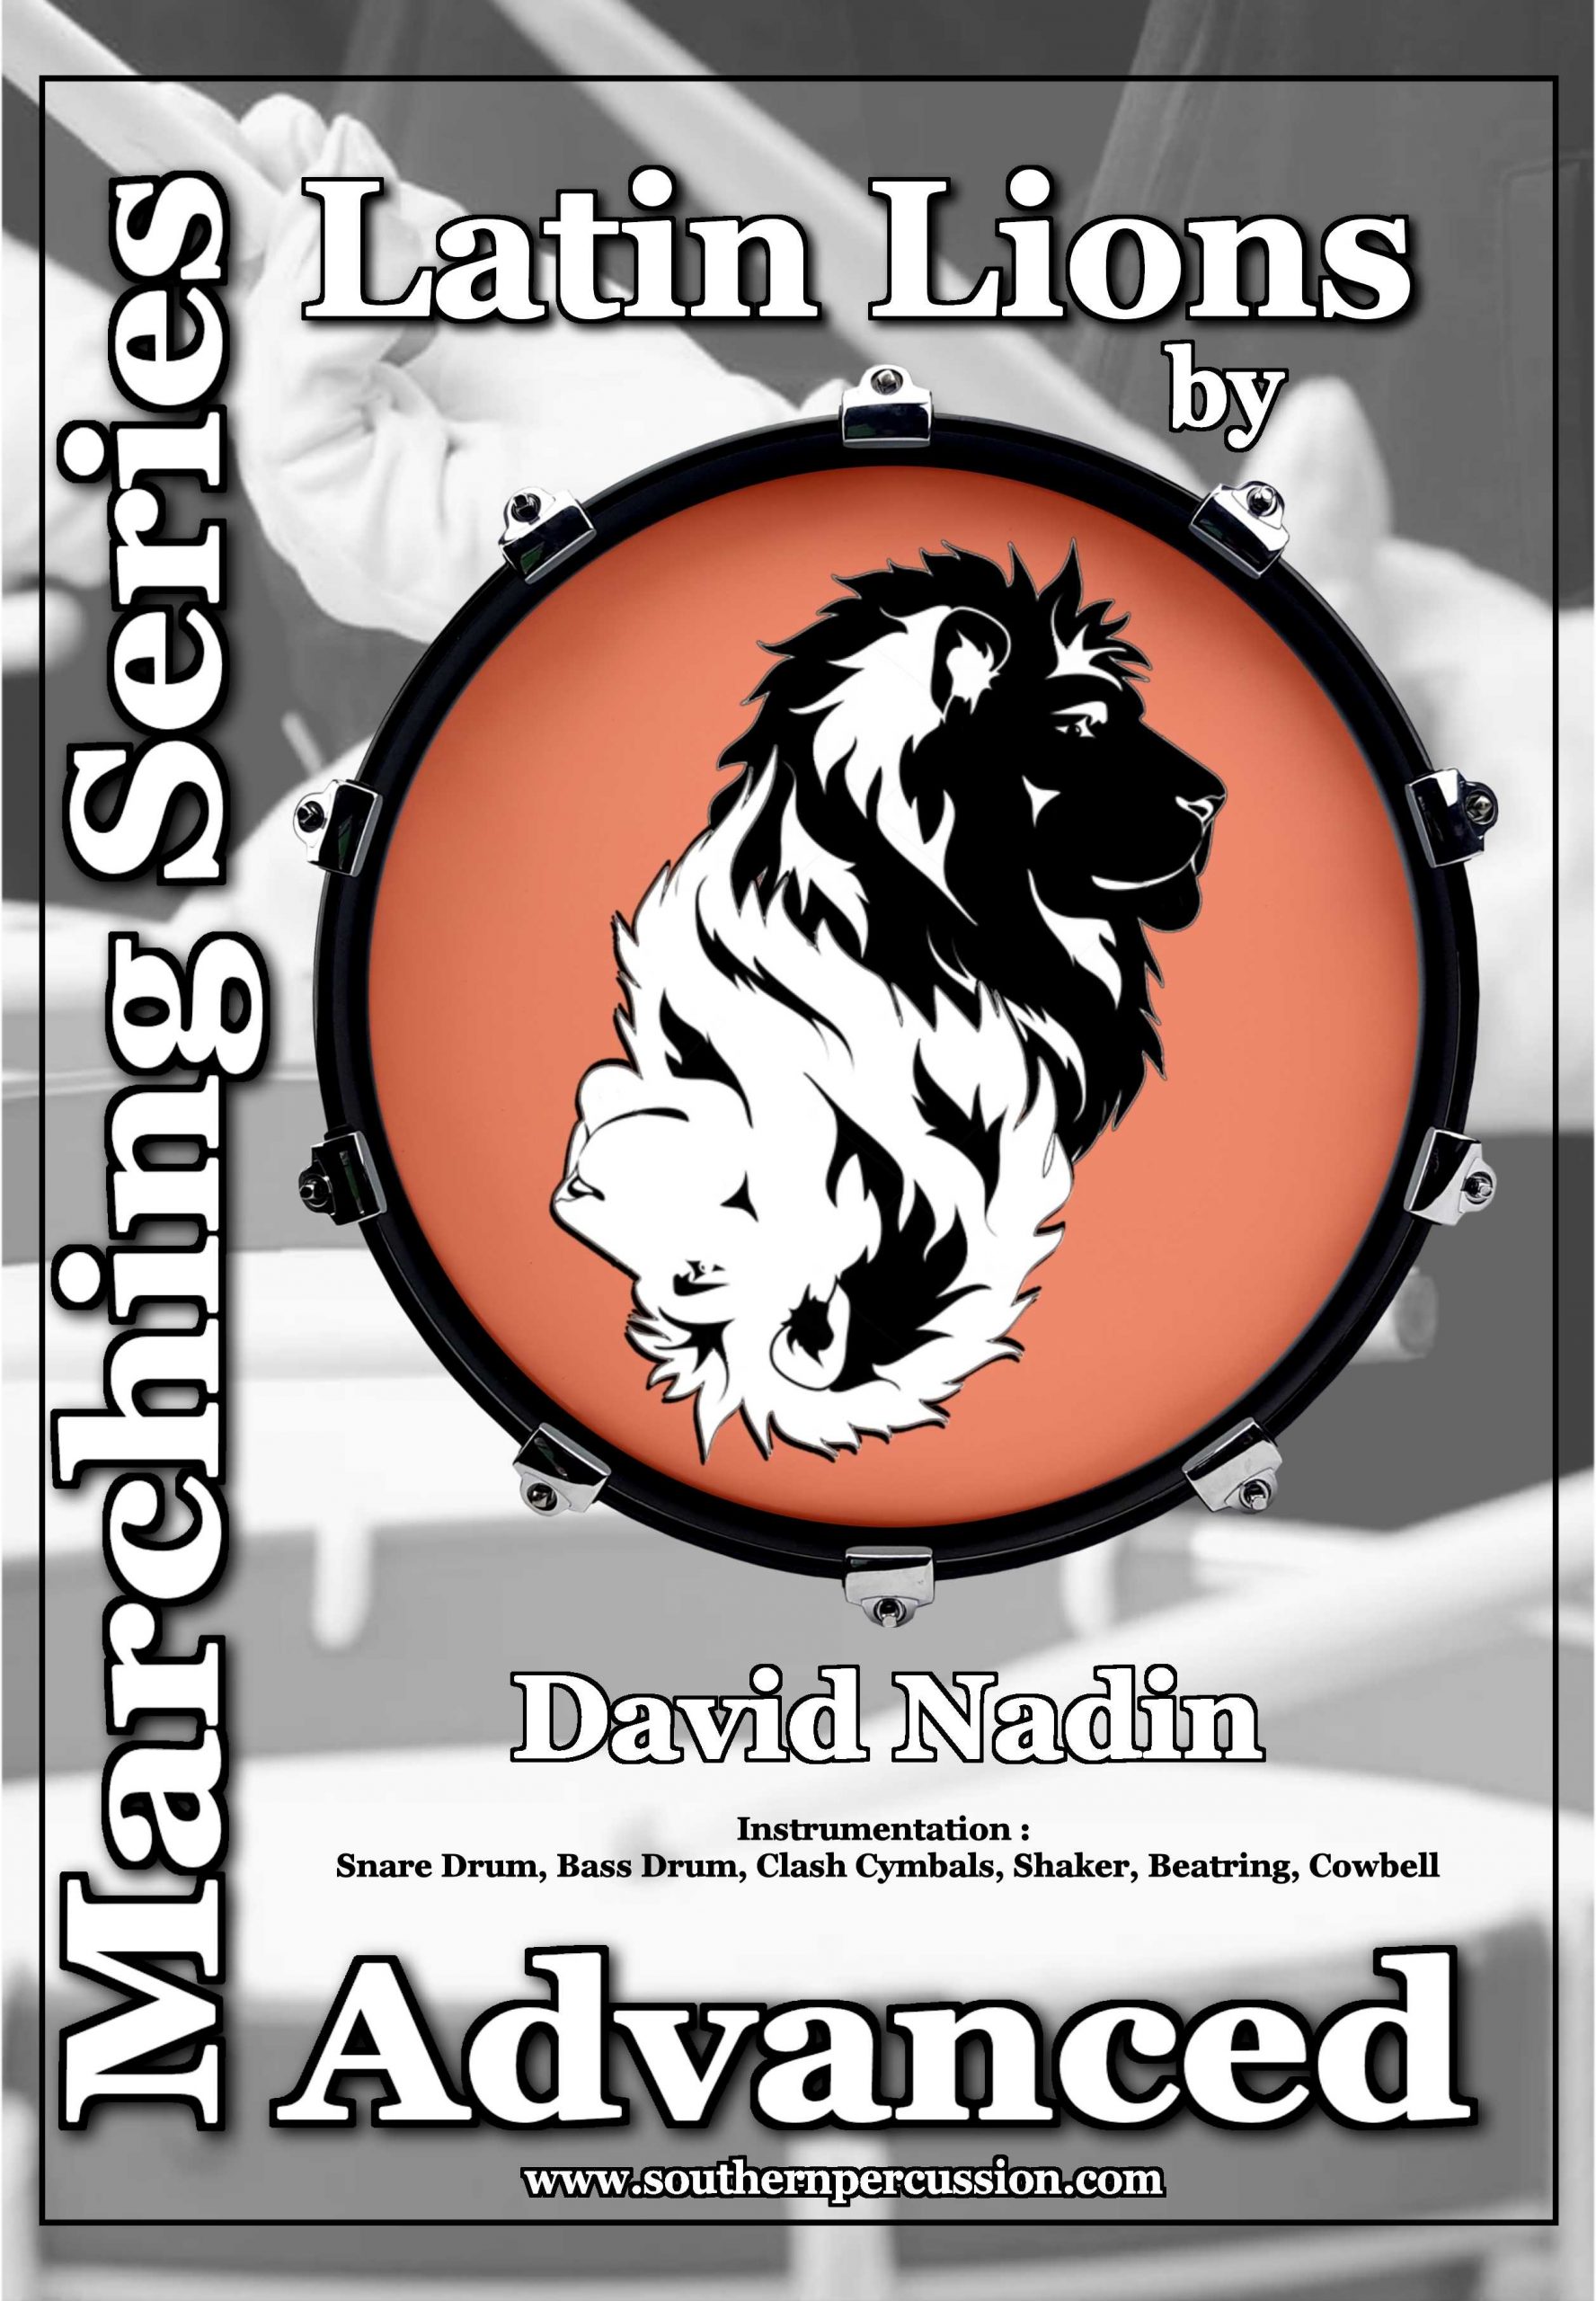 Latin Lions by David Nadin